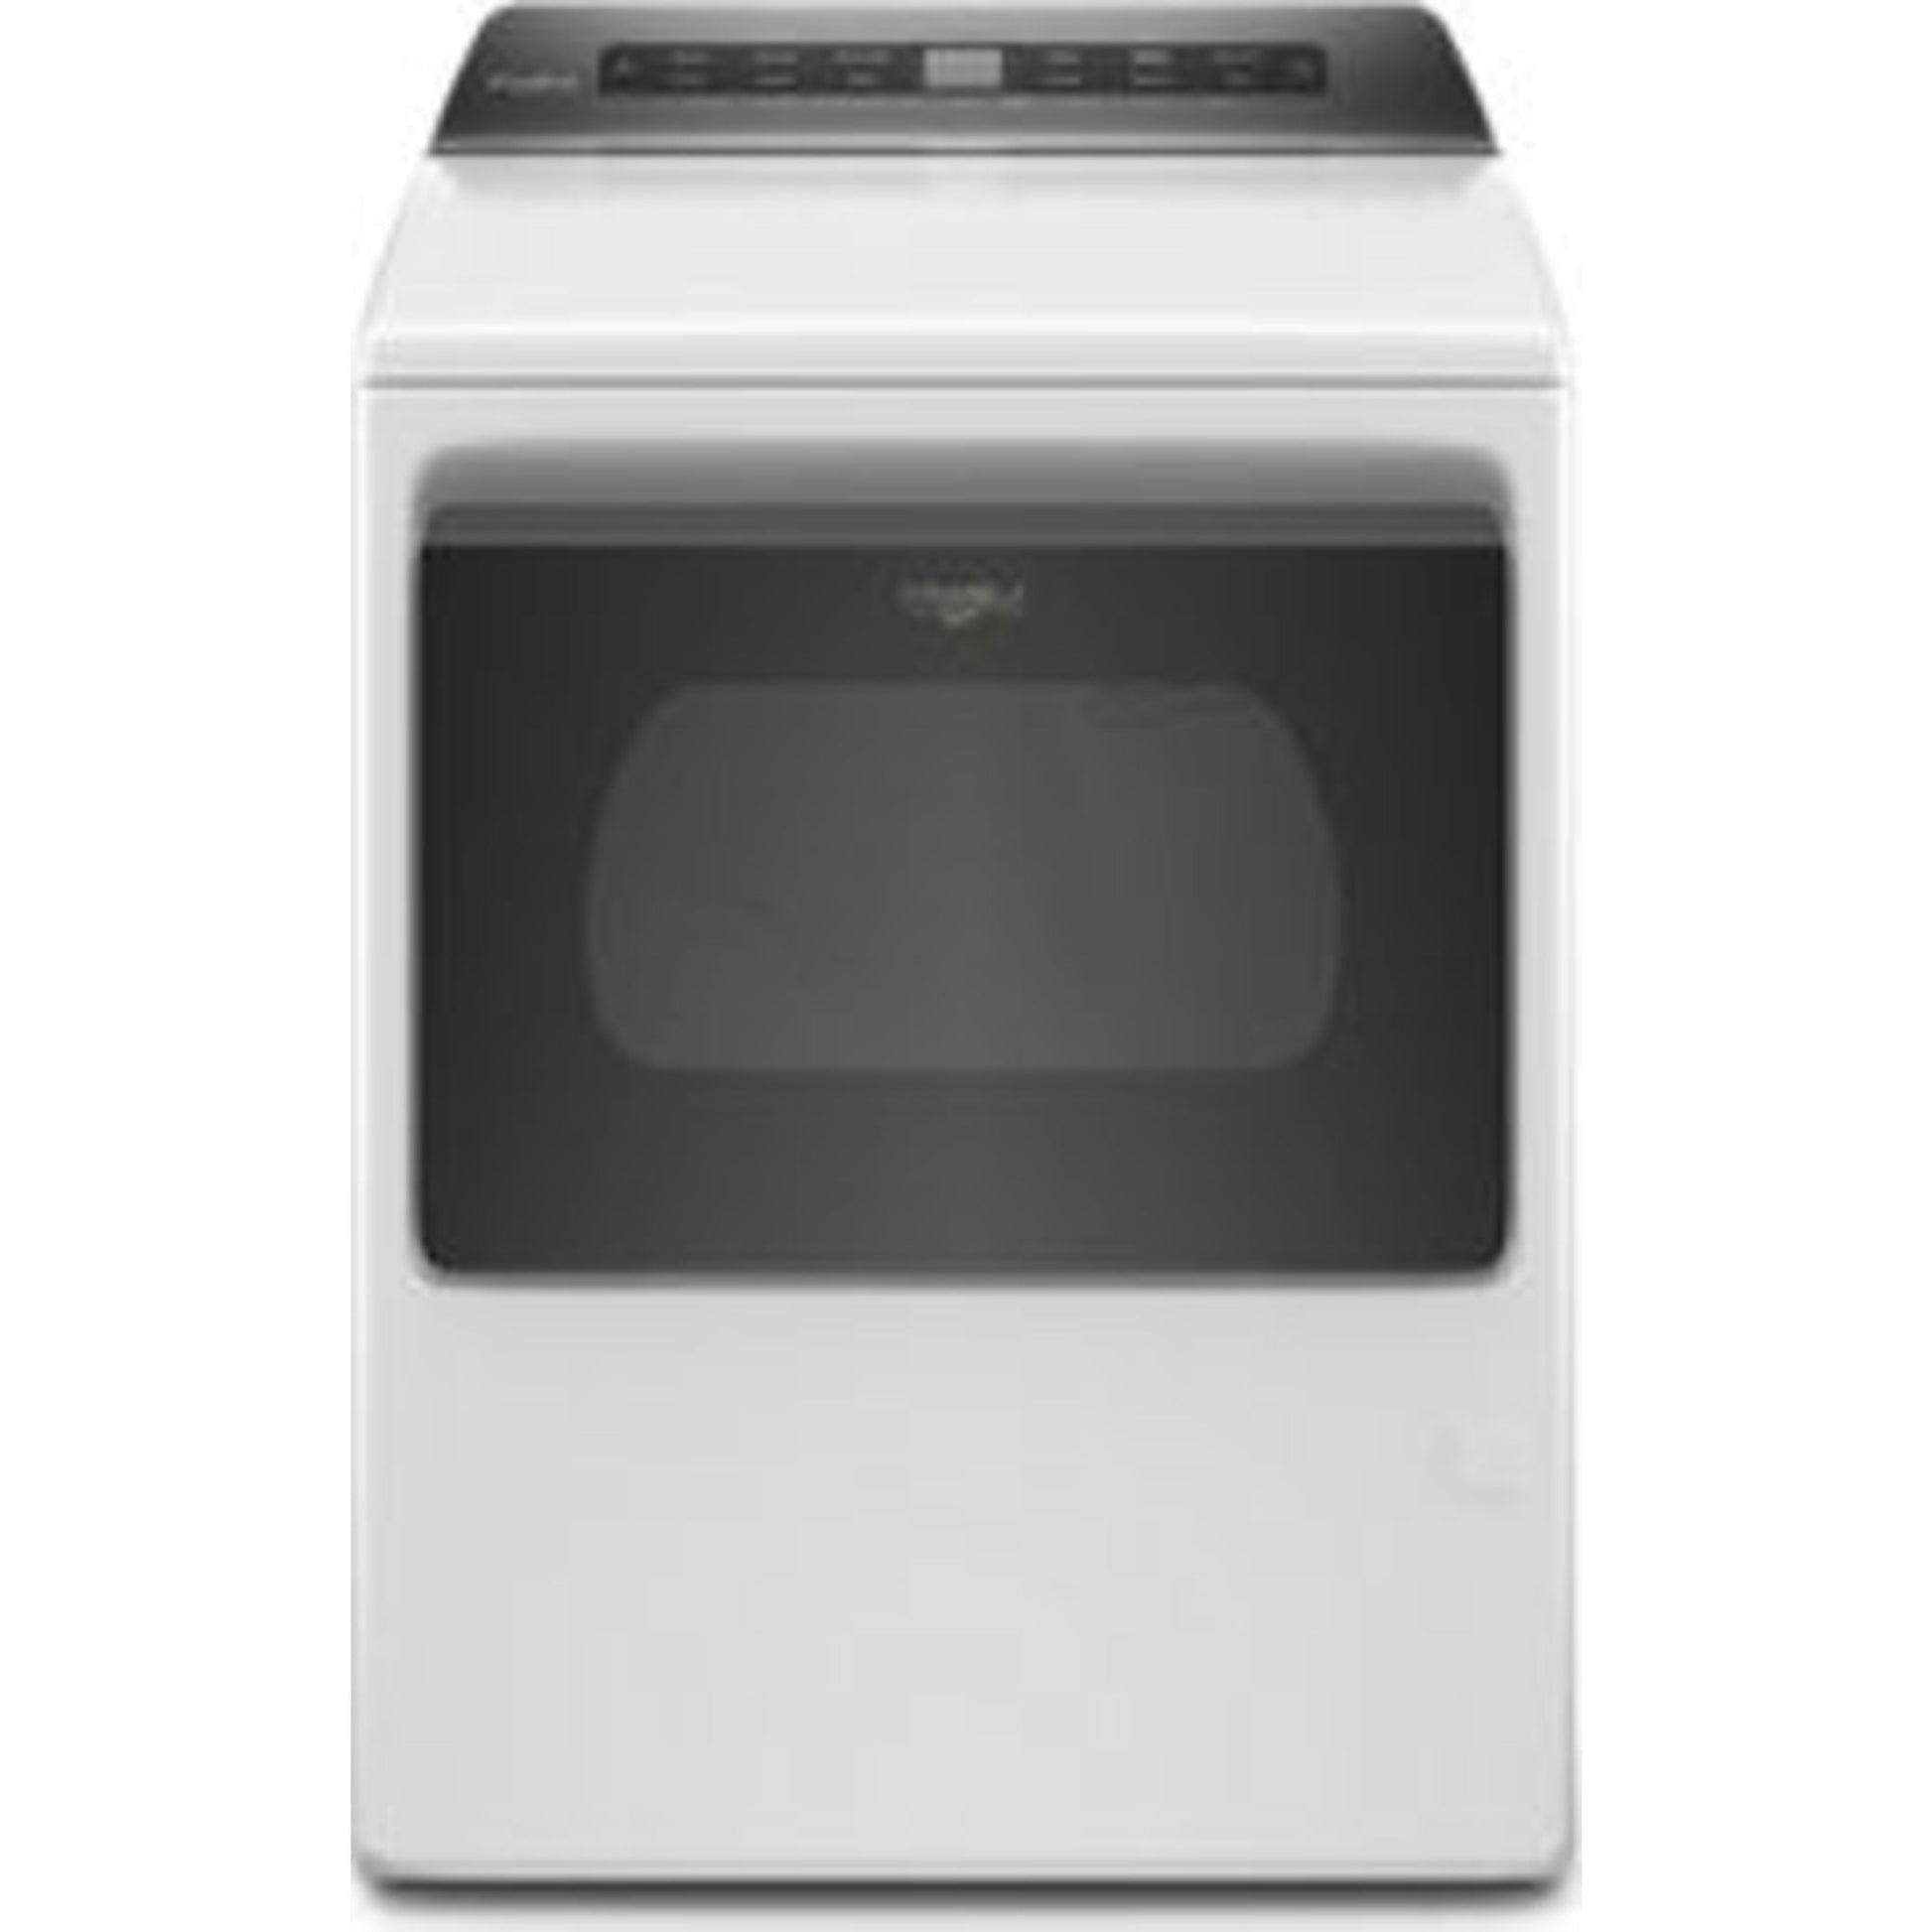 Whirlpool Gas Dryer (WGD5100HW) - White